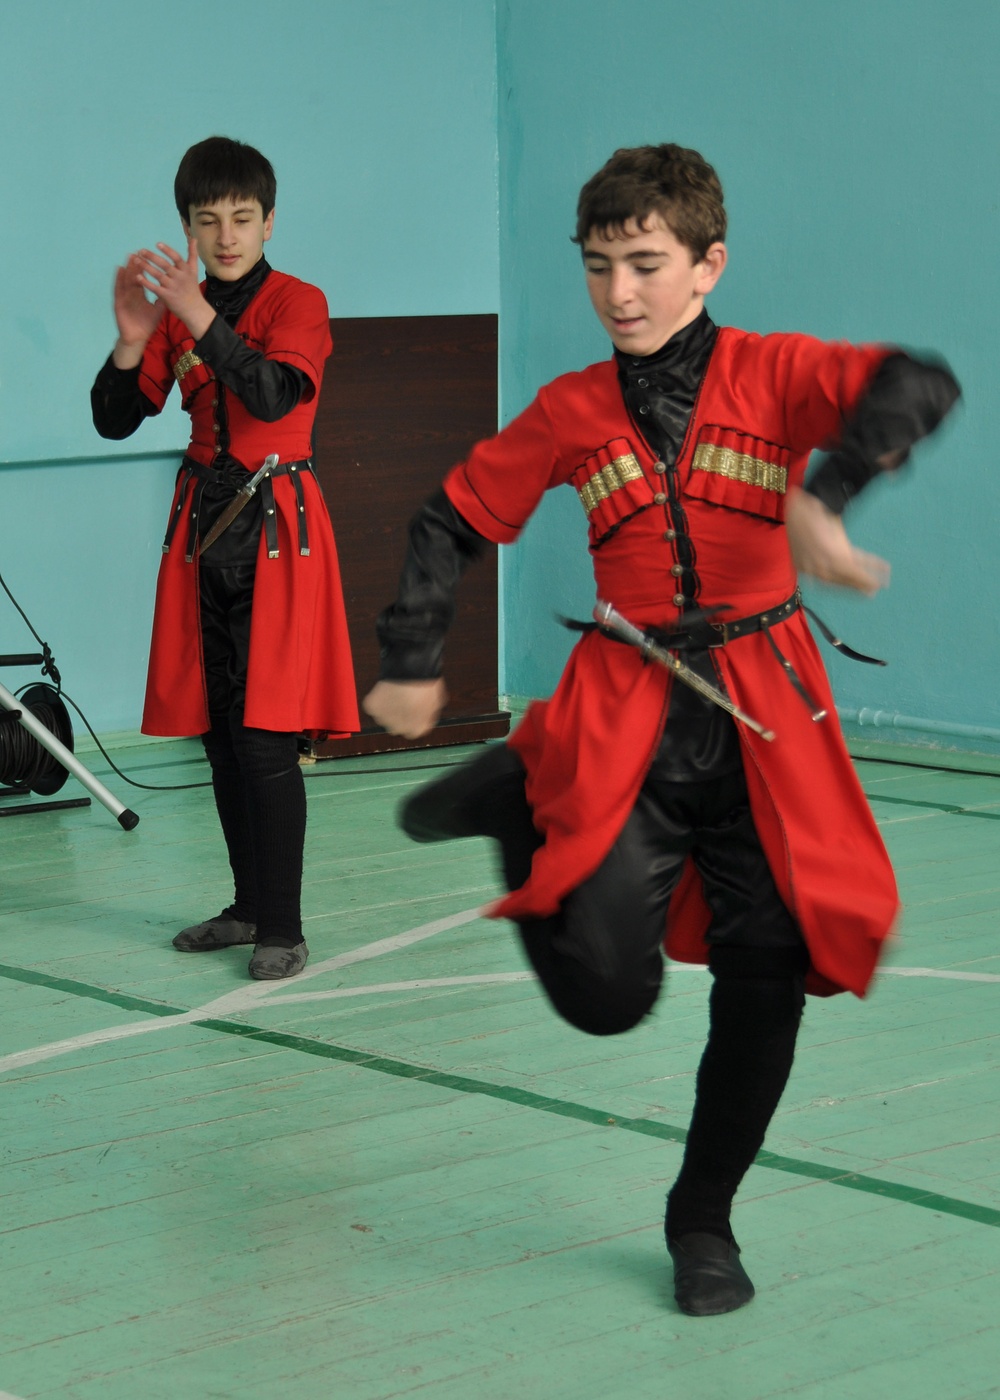 Kyrgyz, U.S. partnership warms local school